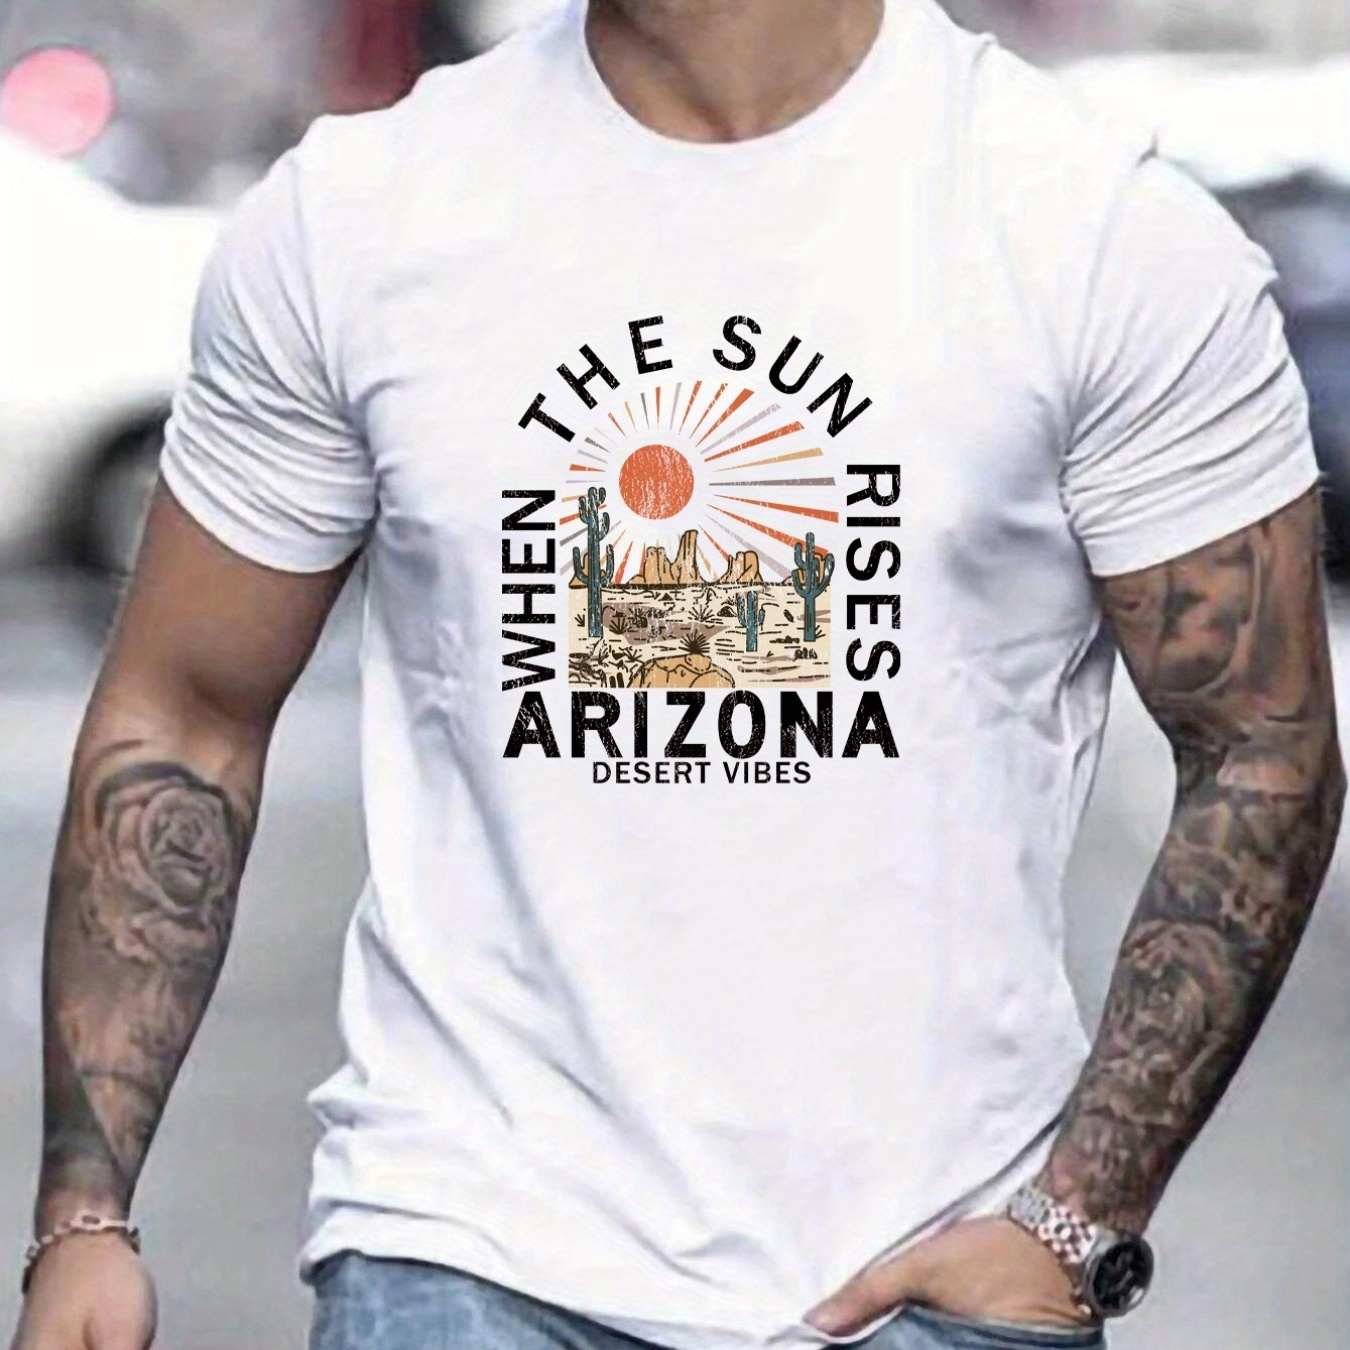 

Arizona Desert Vibes Pattern Print Men's Comfy T-shirt, Graphic Tee Men's Summer Outdoor Clothes, Men's Clothing, Tops For Men